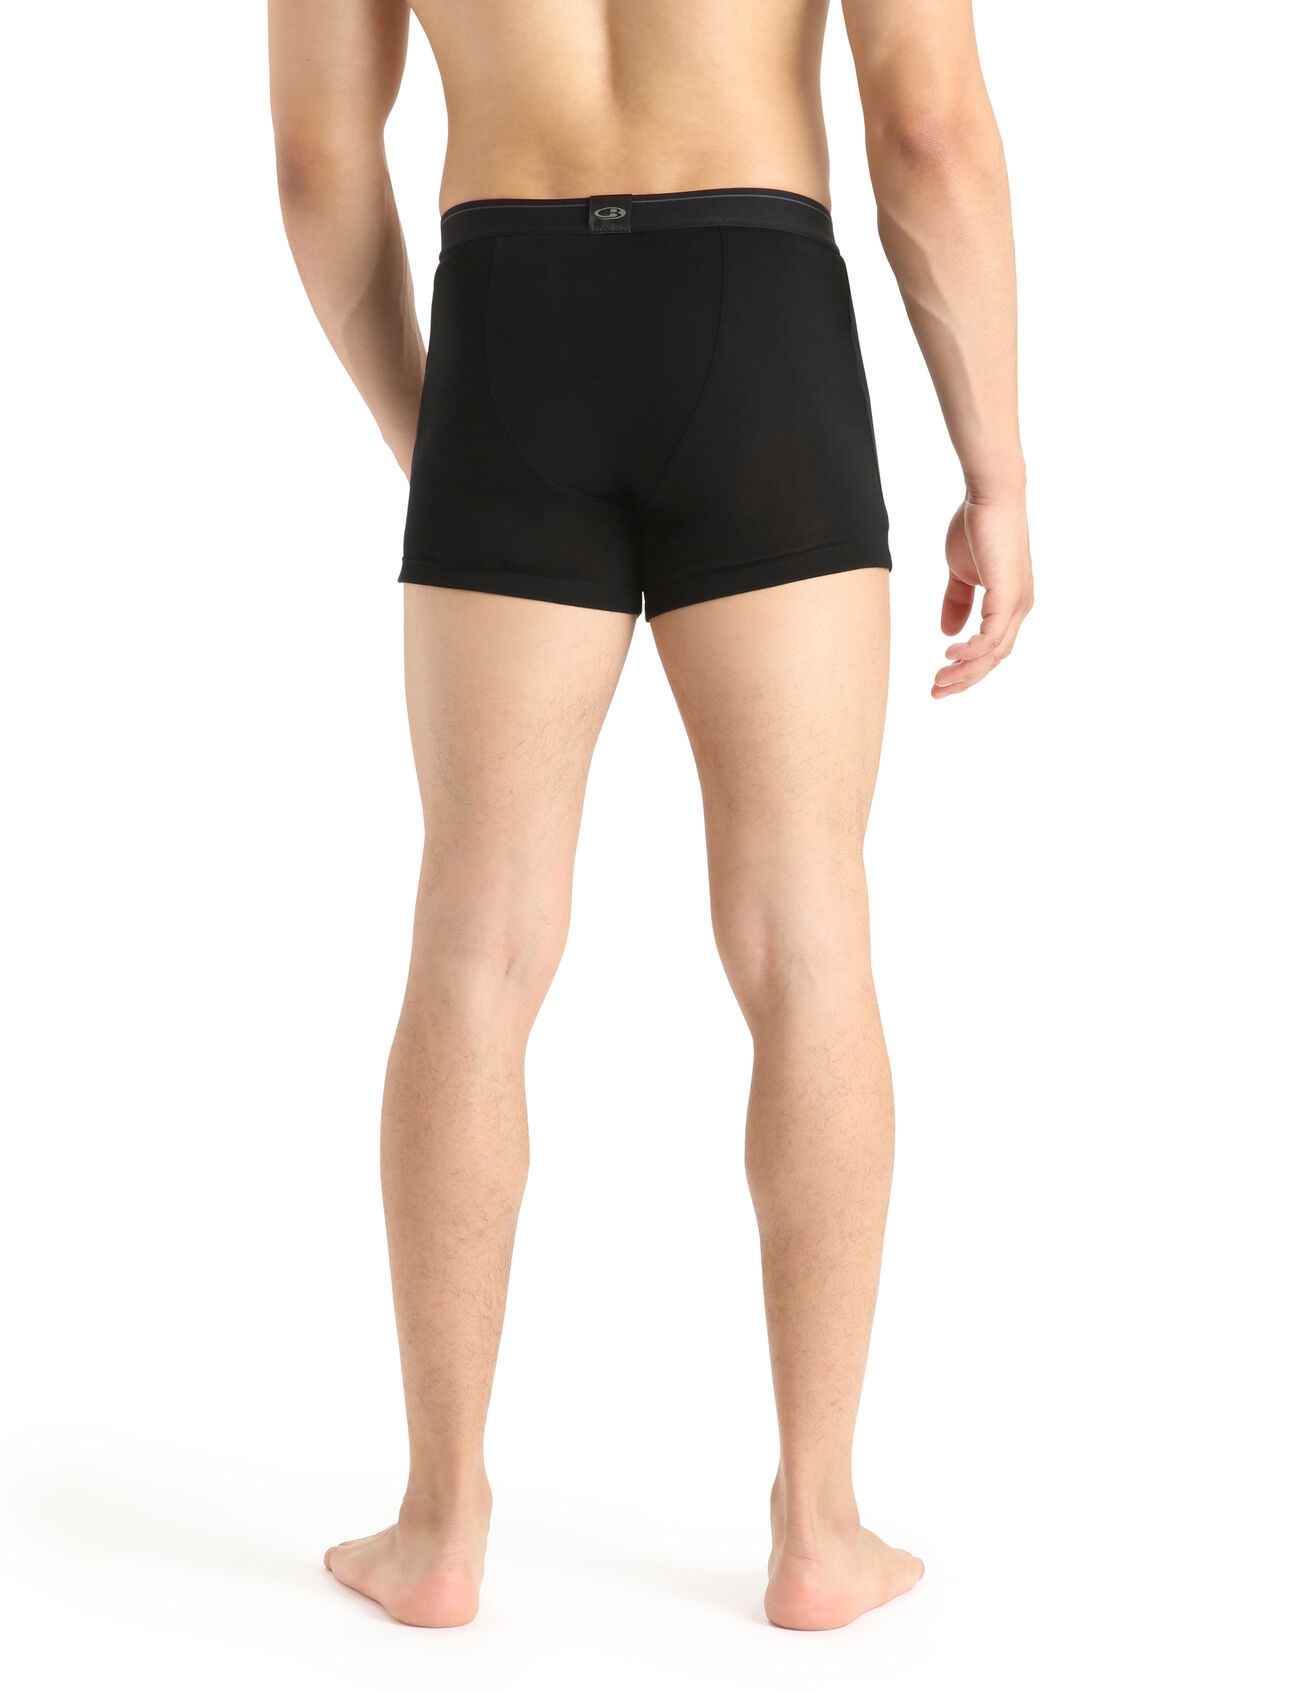 Picture Underwear - Everyday base layer Men's, Buy online